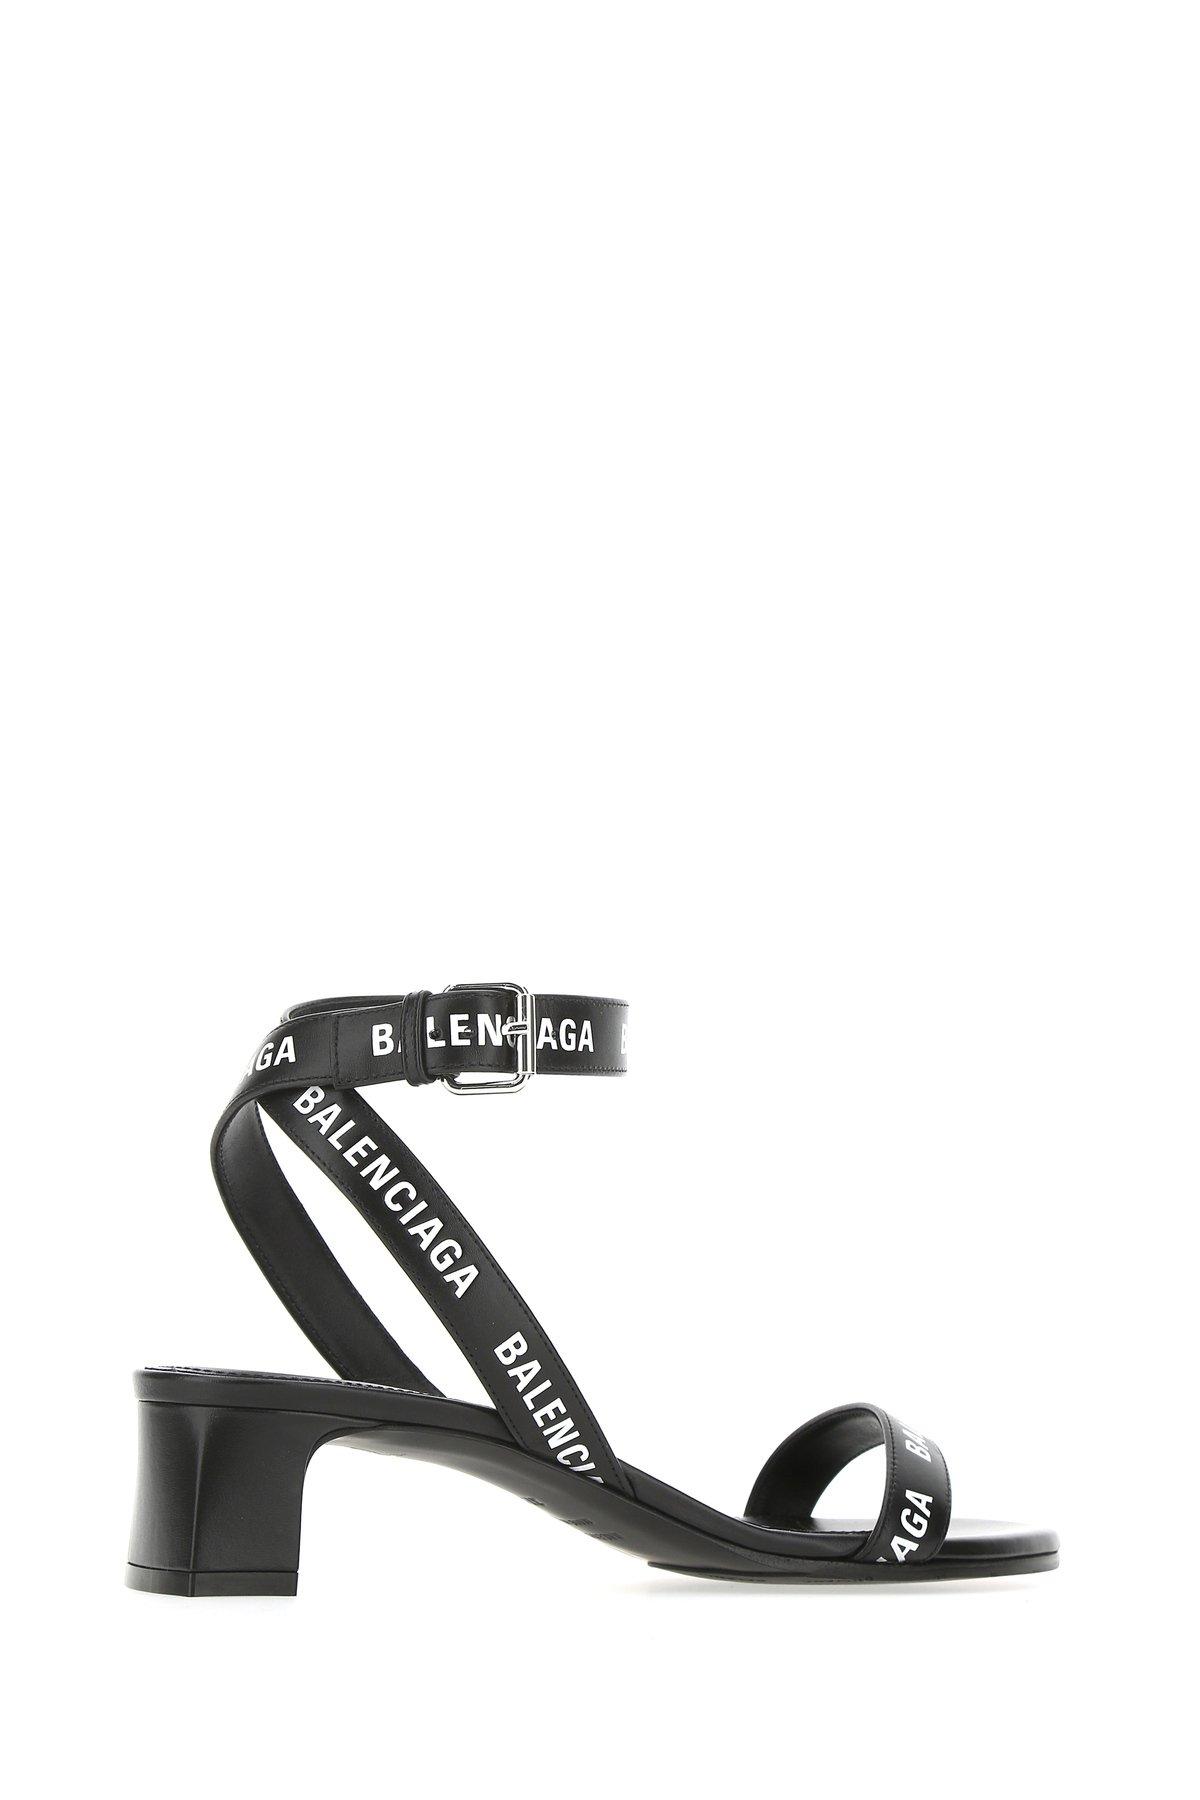 Balenciaga Black & White Allover Logo Strap Sandals | Lyst